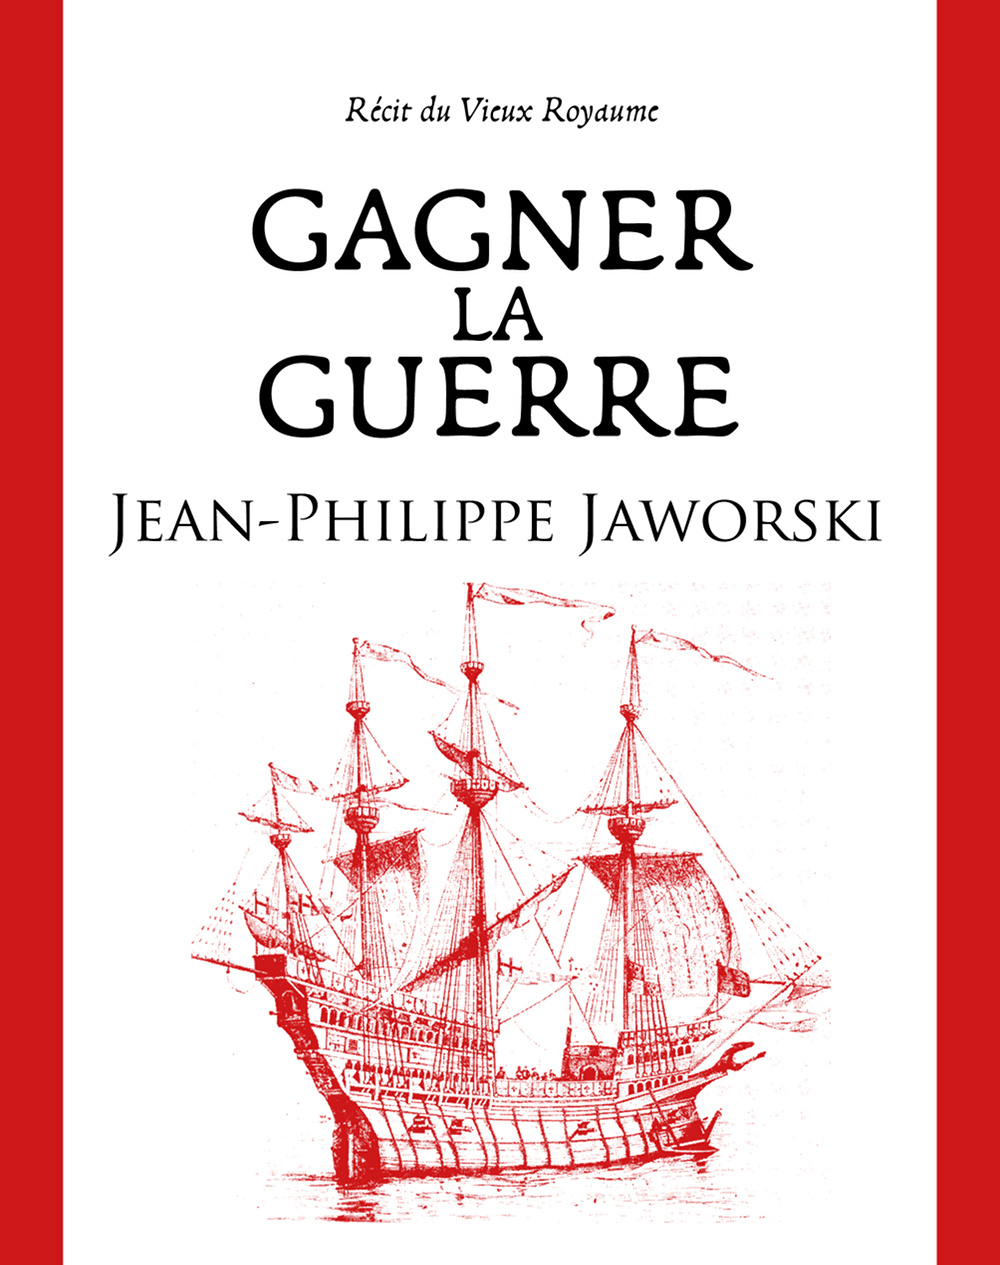 Jean-Philippe Jaworski: Gagner la guerre (EBook, French language, 2012)